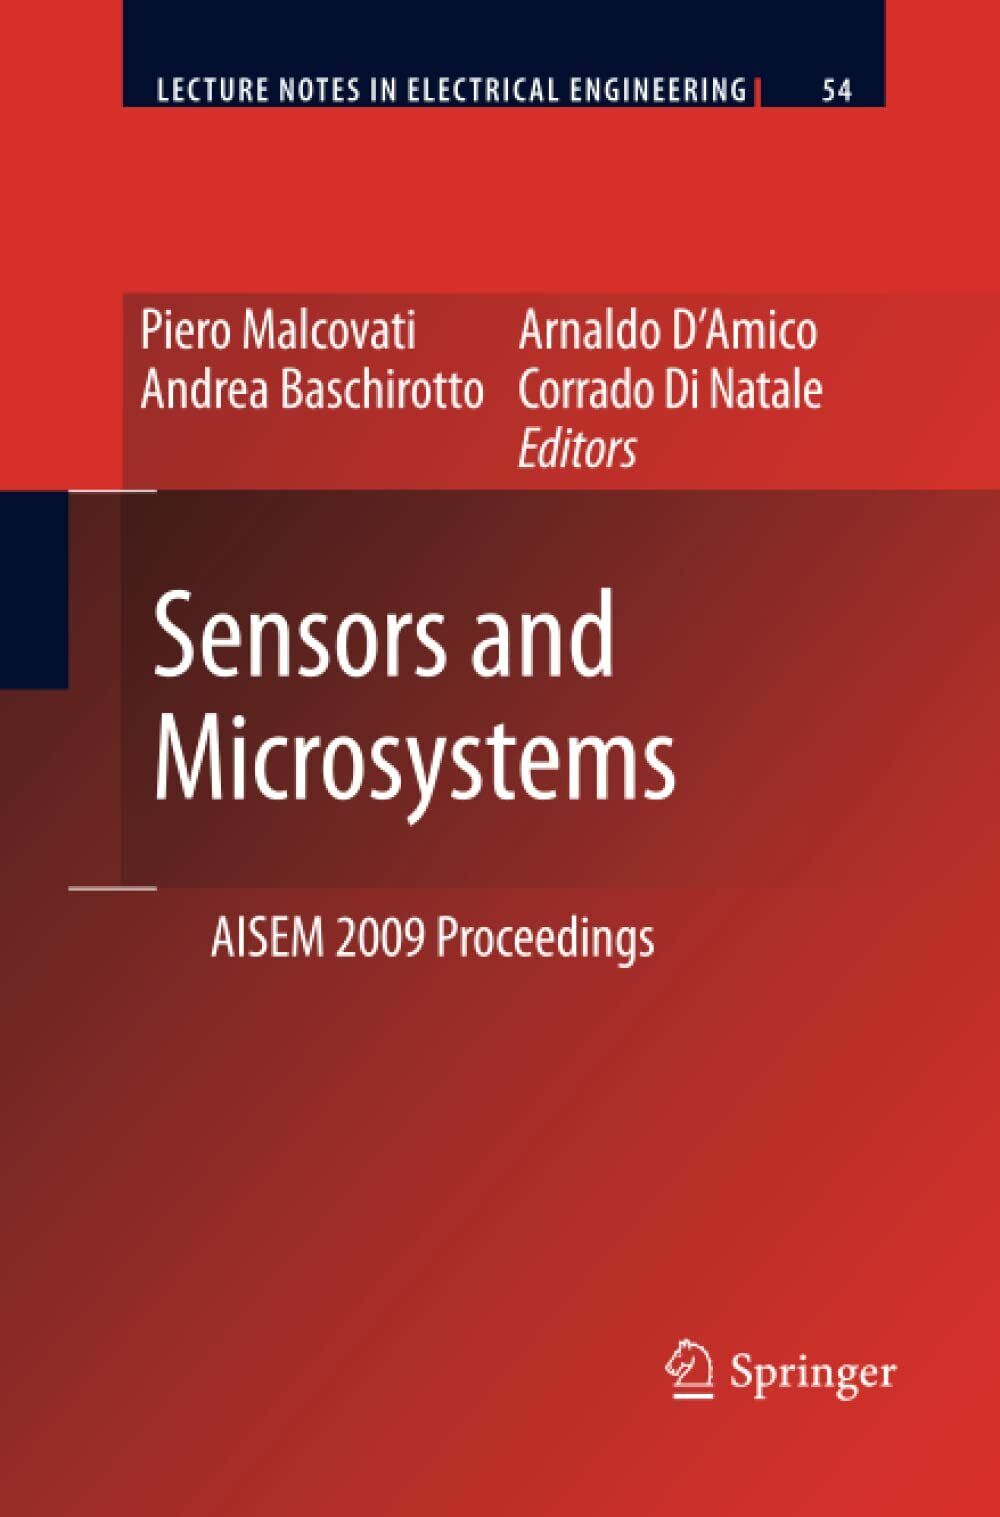 Sensors and Microsystems - Piero Malcovati  - Springer, 2012